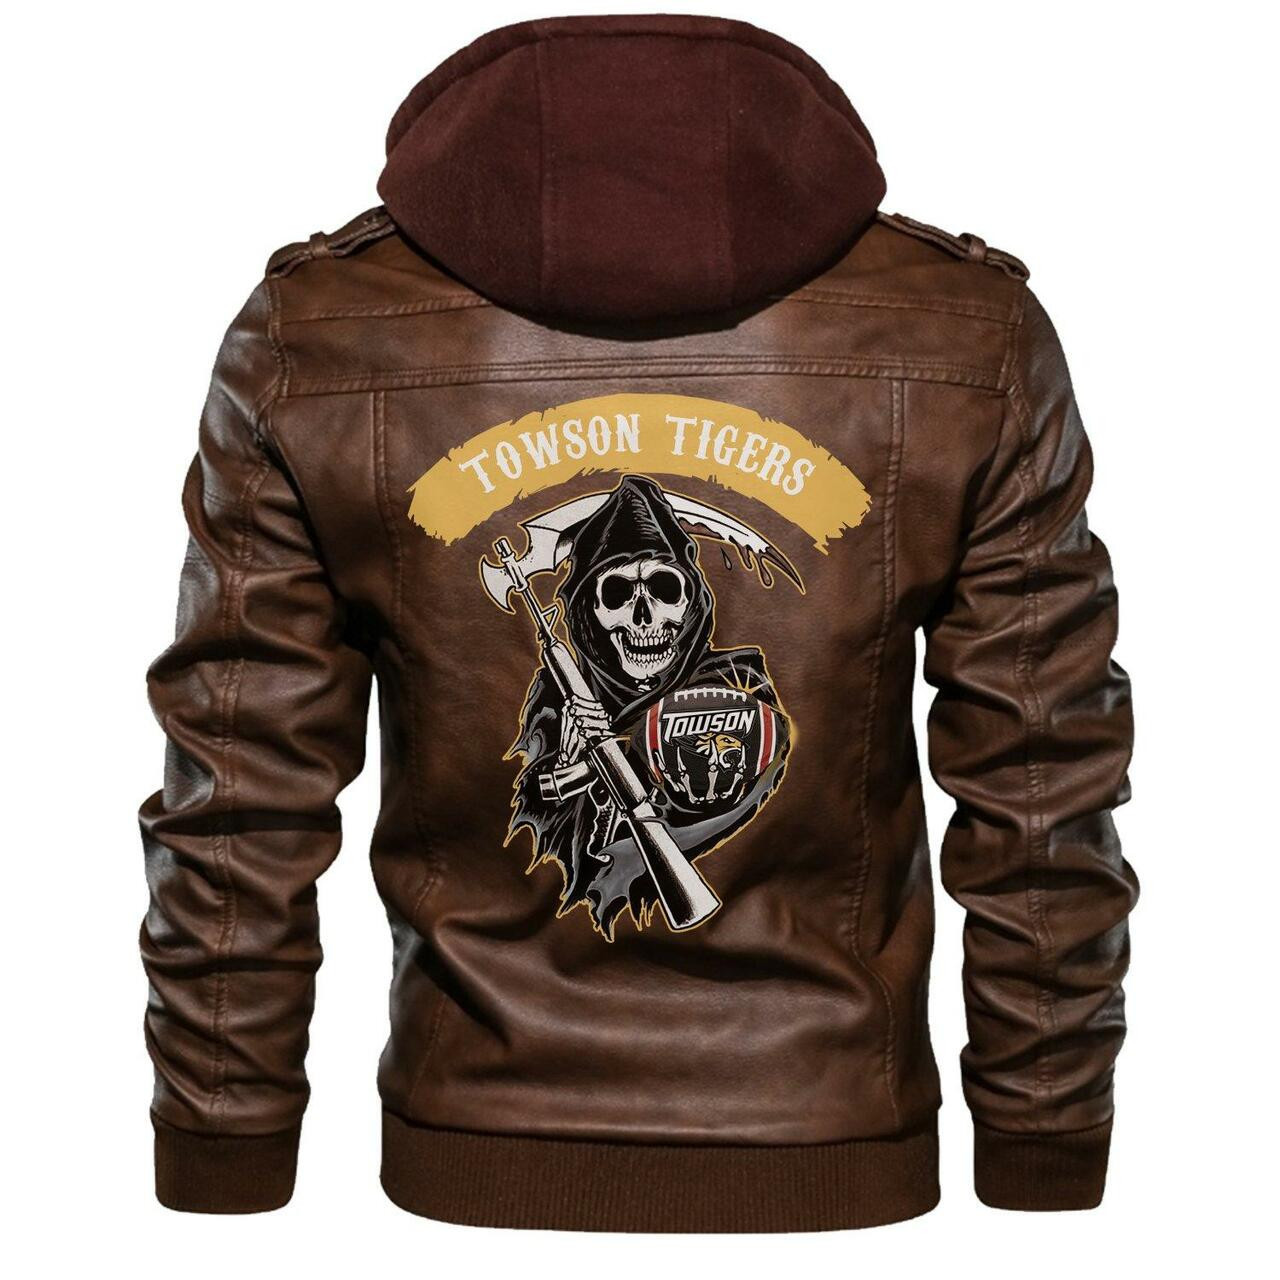 Top leather jacket Sells Best on Techcomshop 97